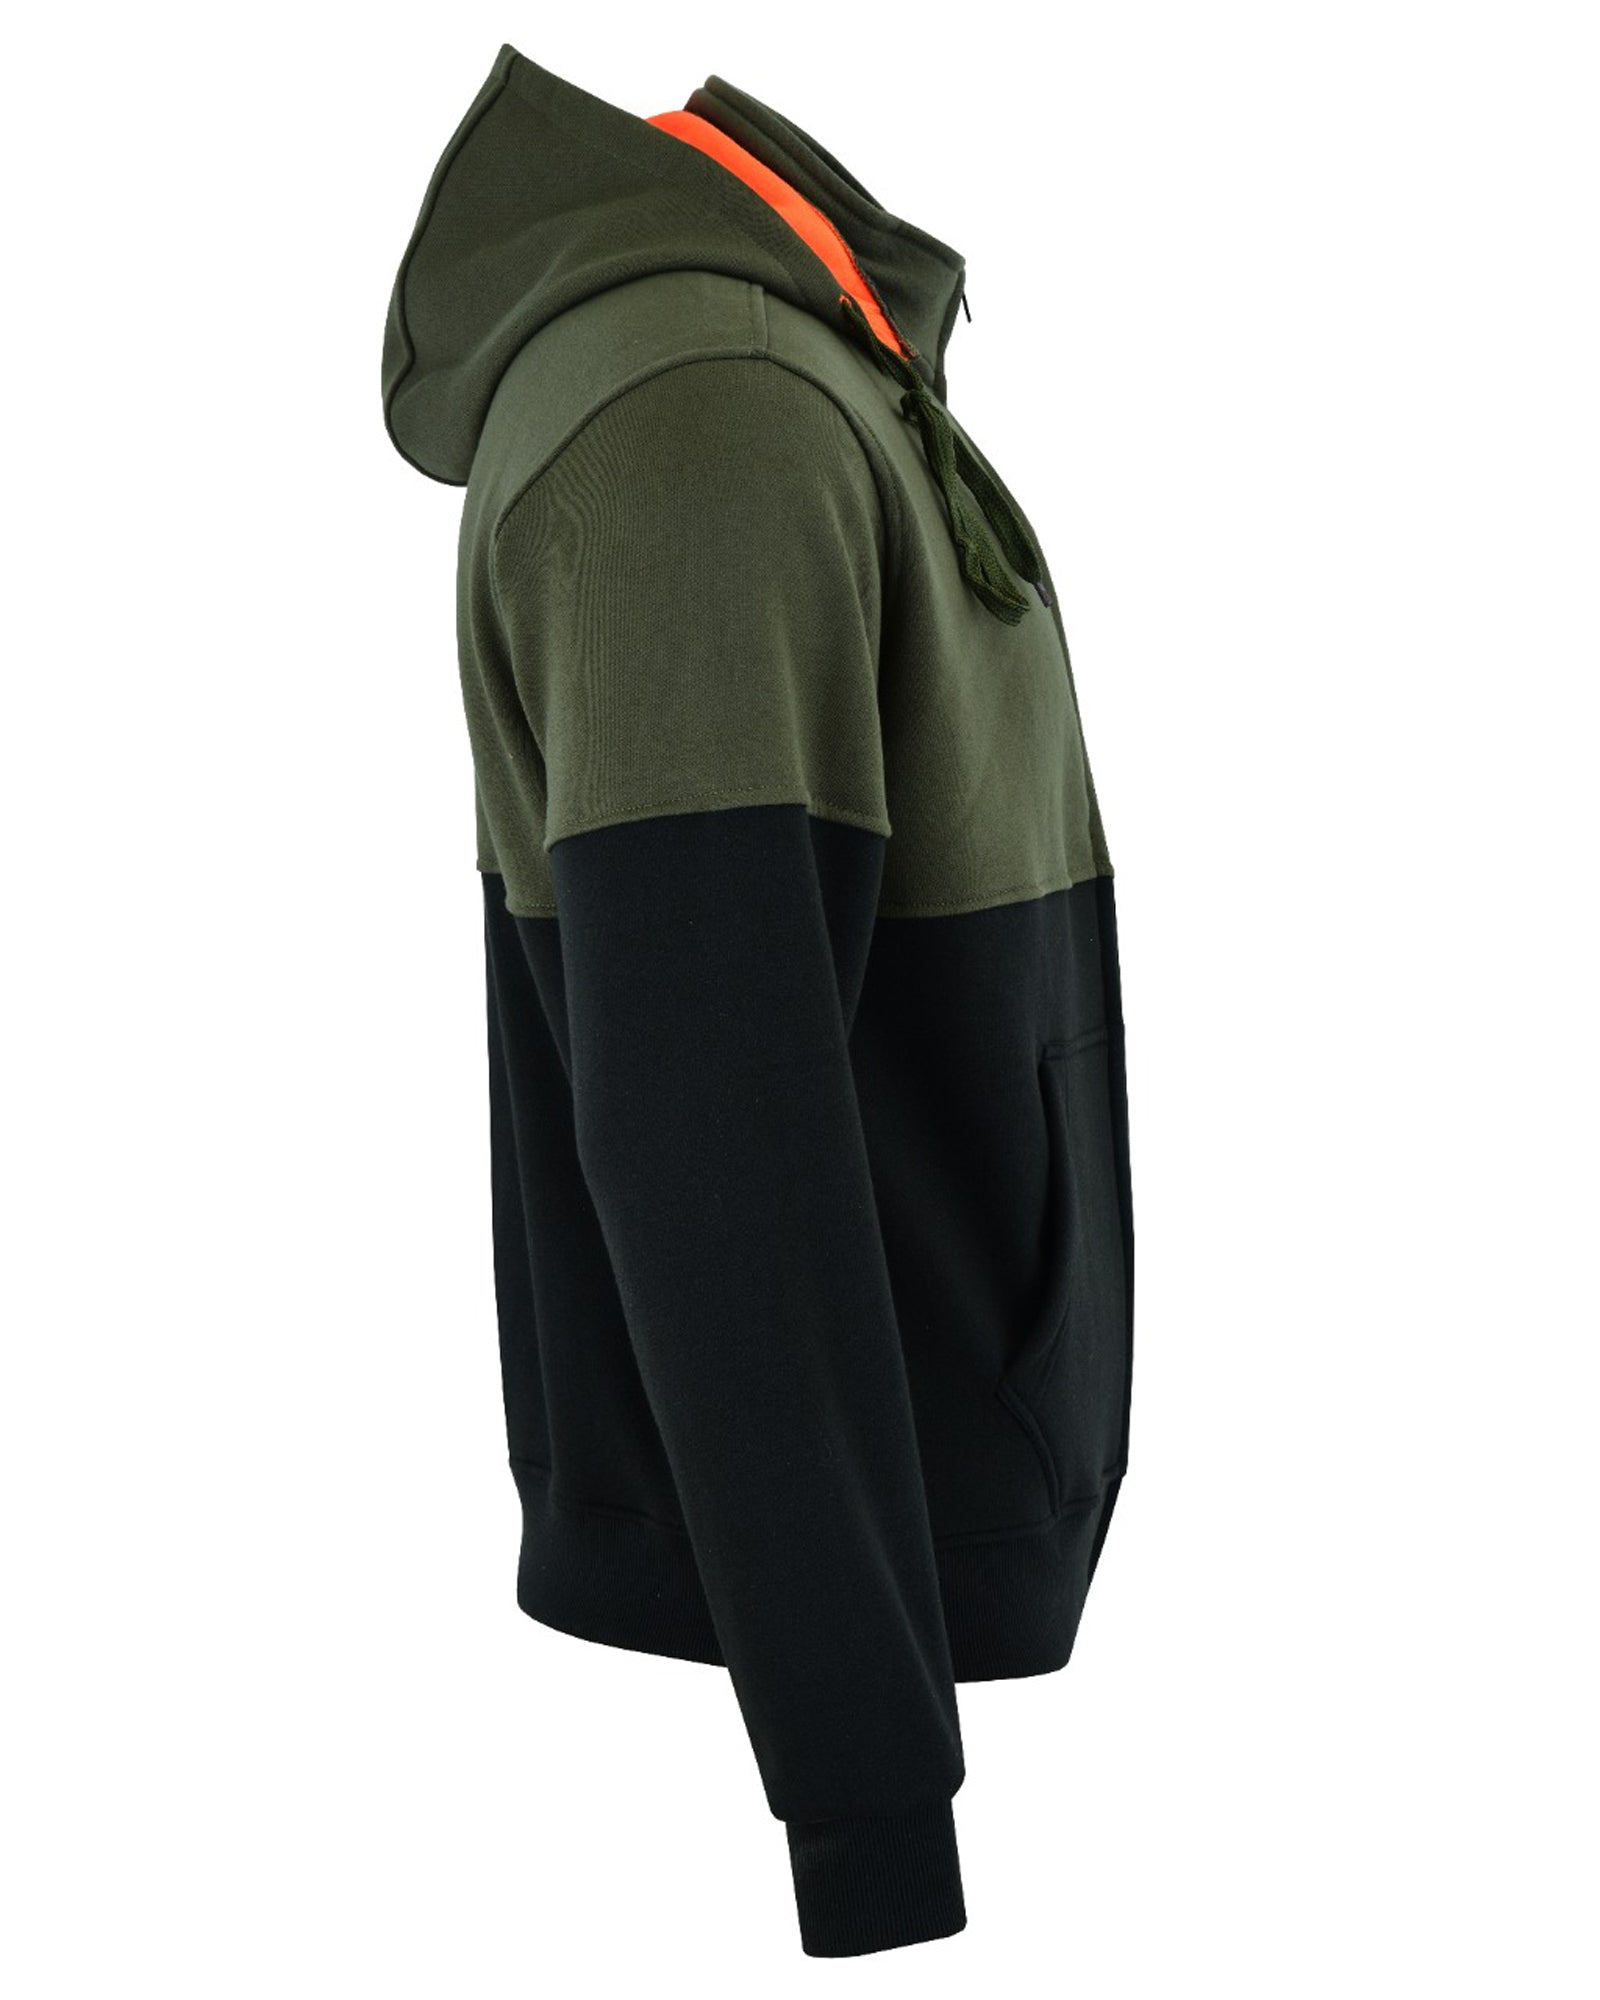 Felpa KONUSTEX LYSEO verde nera con cappuccio e rinforzi #357 - OnTheRoad.shop - KONUSTEX